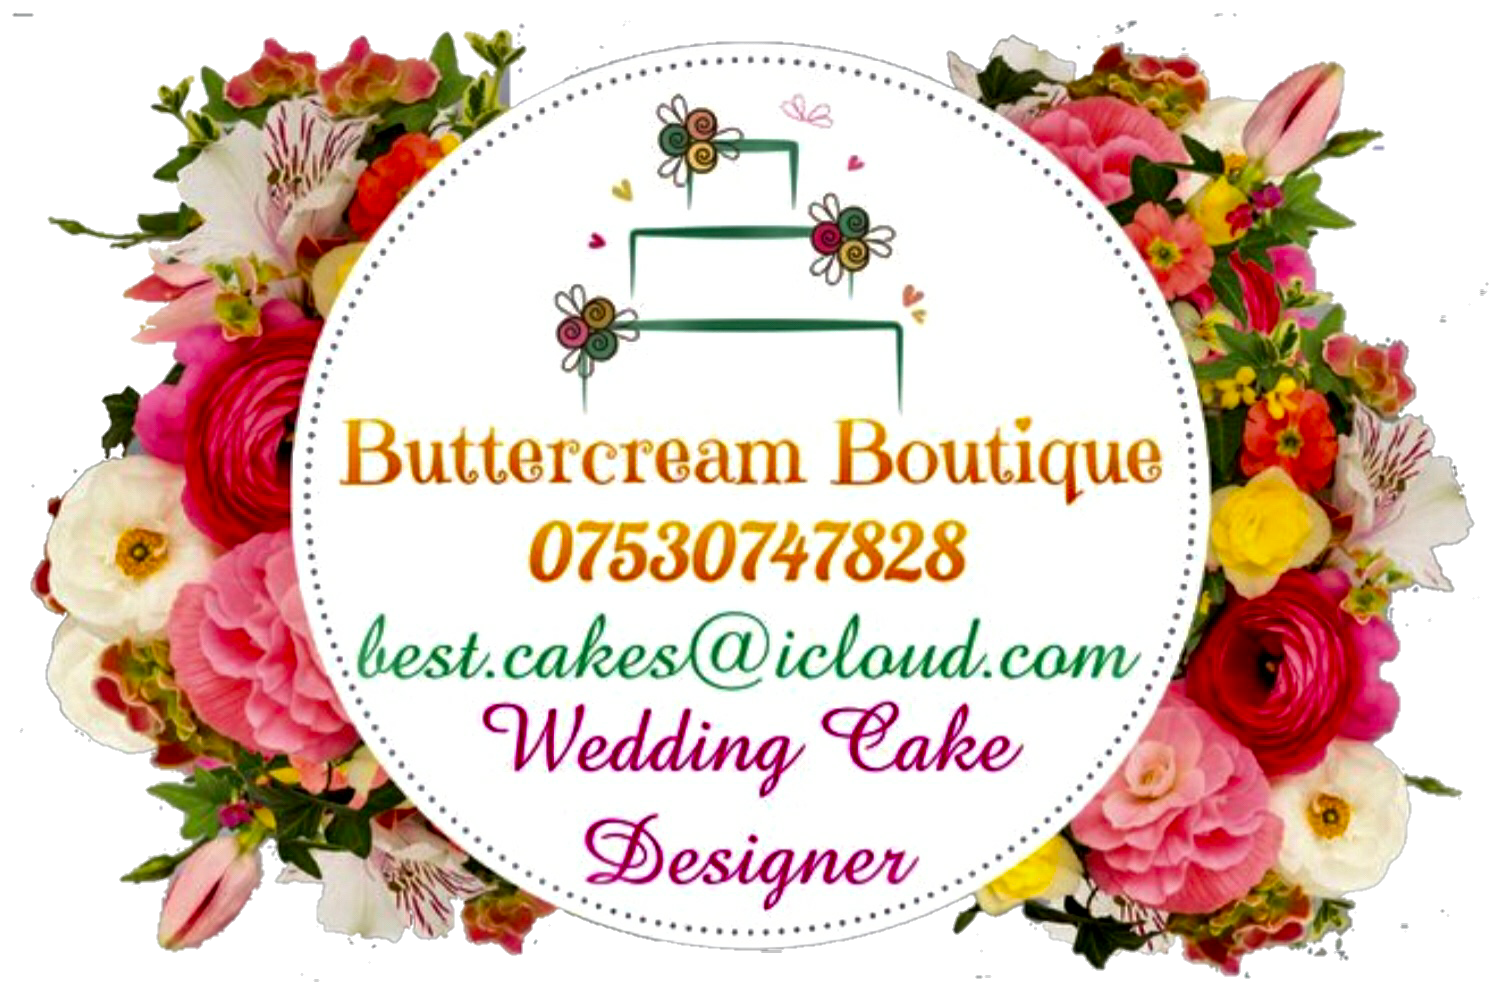 Wedding cake designer 